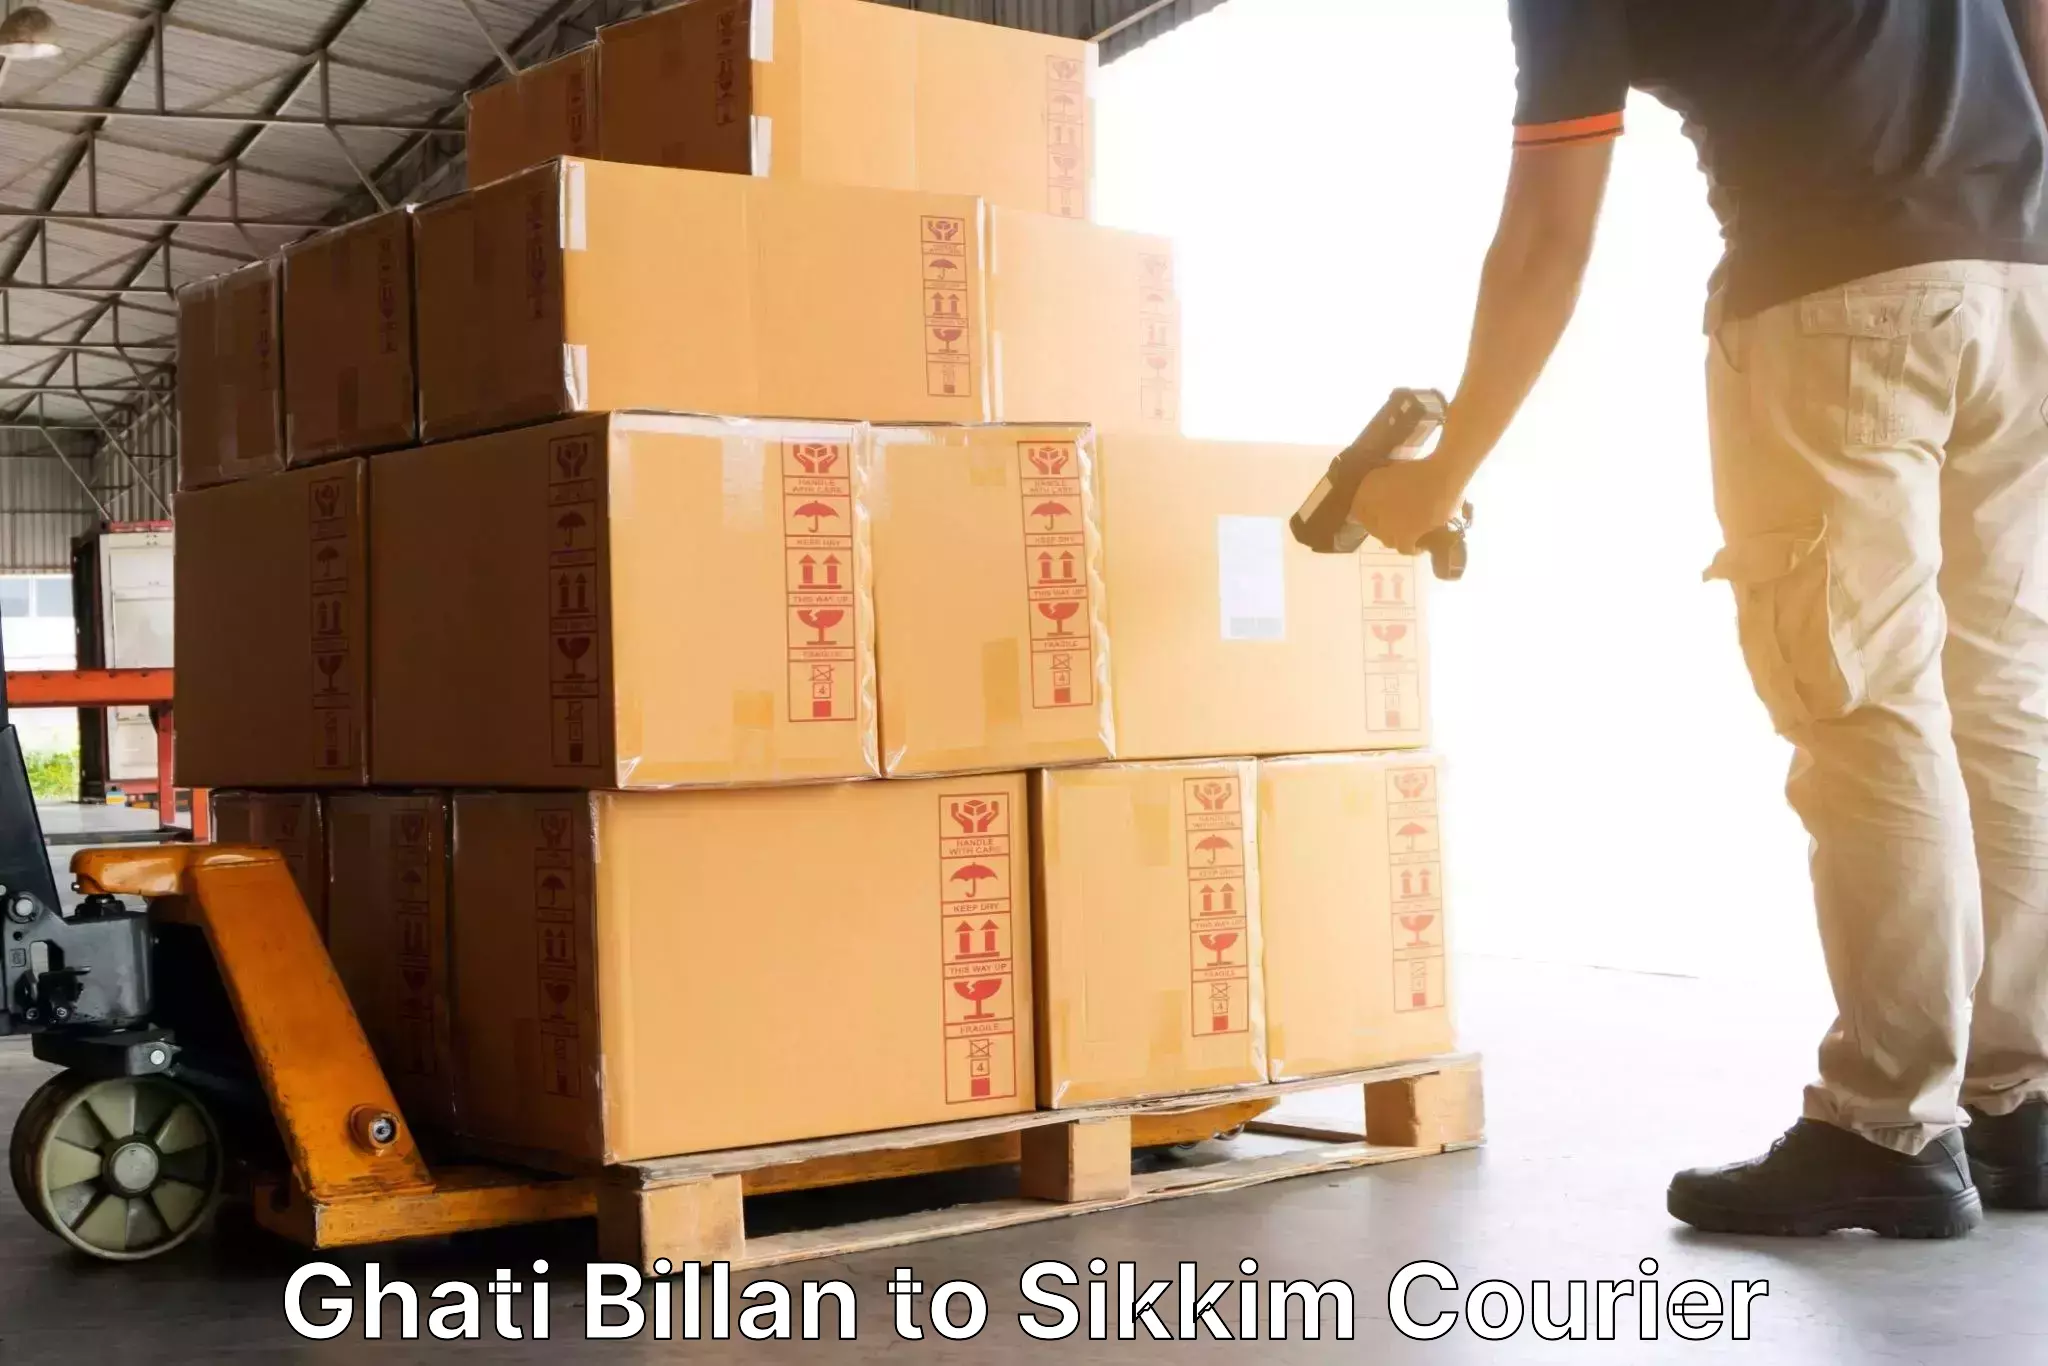 Efficient order fulfillment Ghati Billan to Sikkim